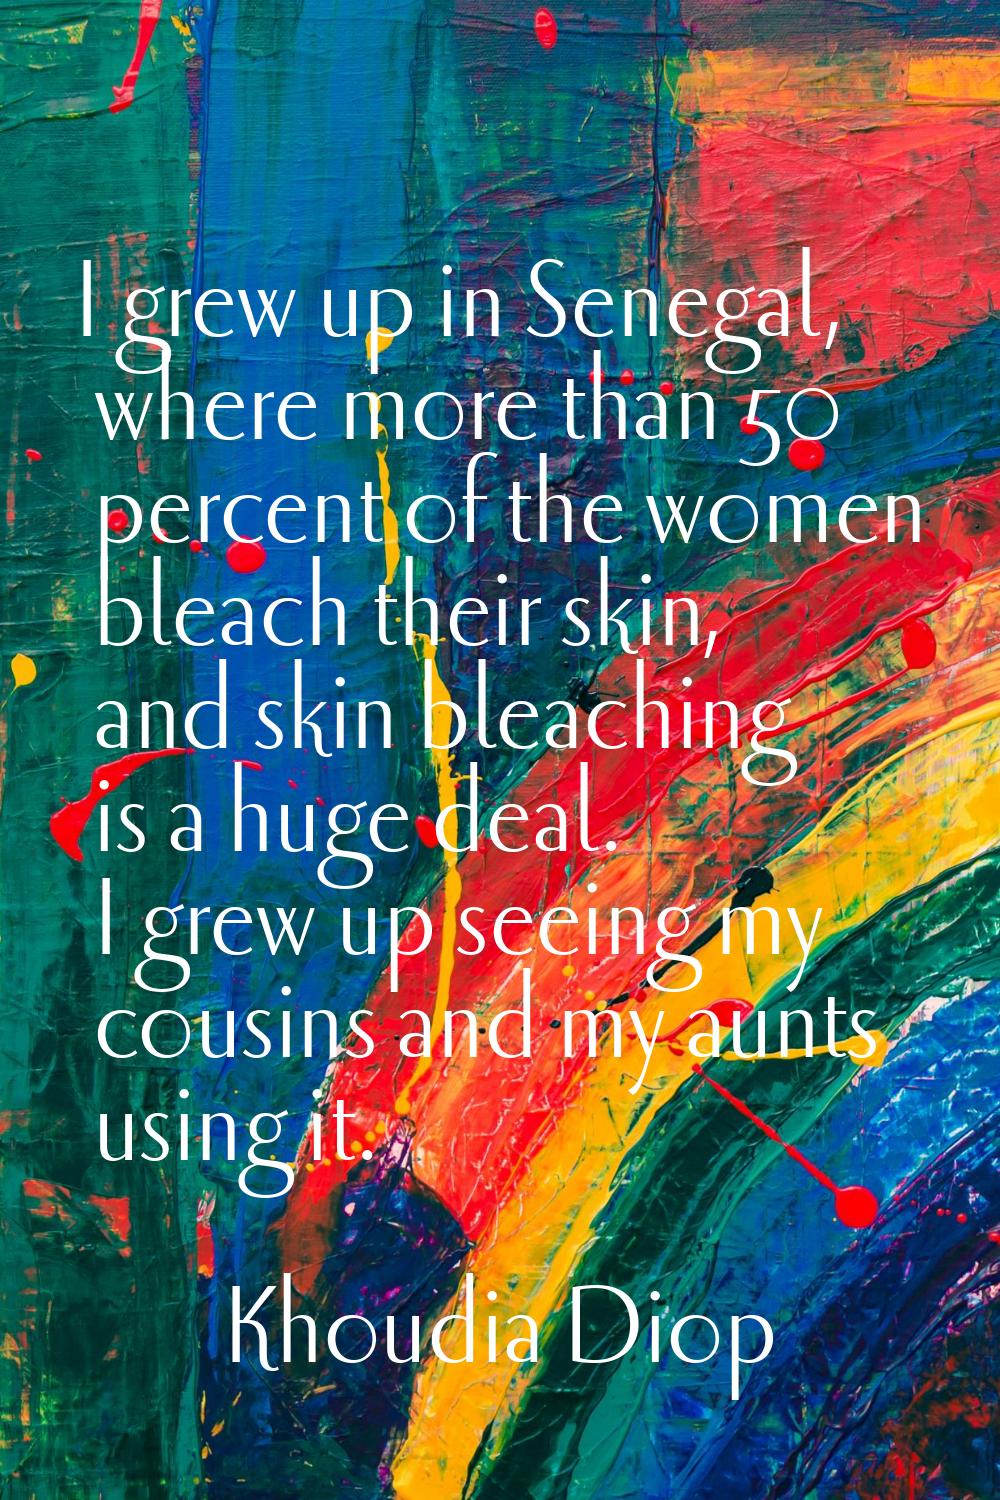 I grew up in Senegal, where more than 50 percent of the women bleach their skin, and skin bleaching